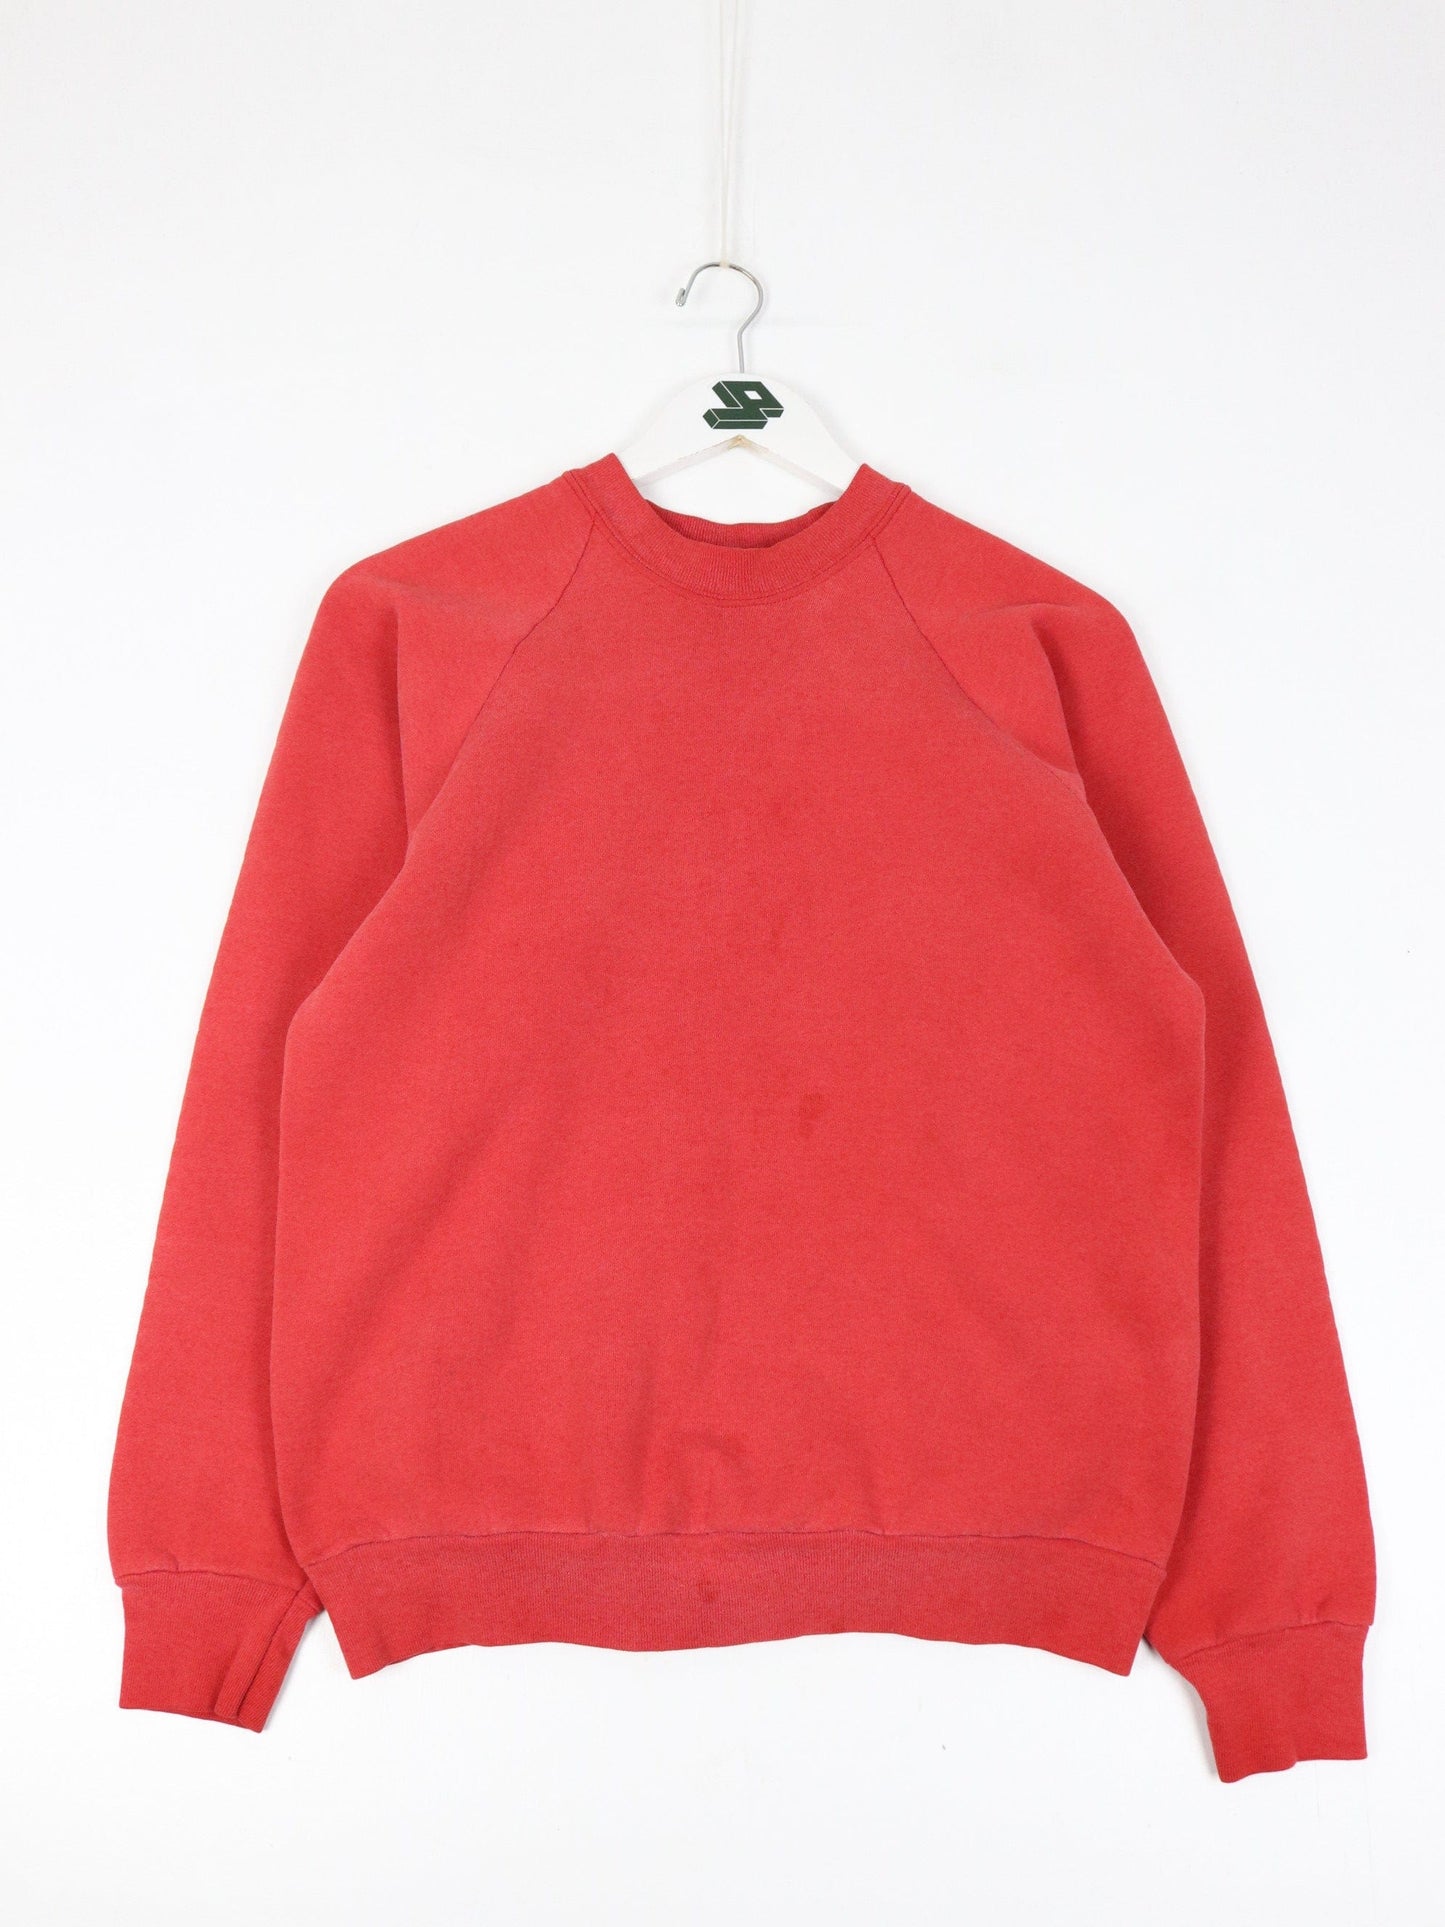 Other Sweatshirts & Hoodies Vintage Fruit of the Loom Sweatshirt Fits Mens Small Red Blank Sweater